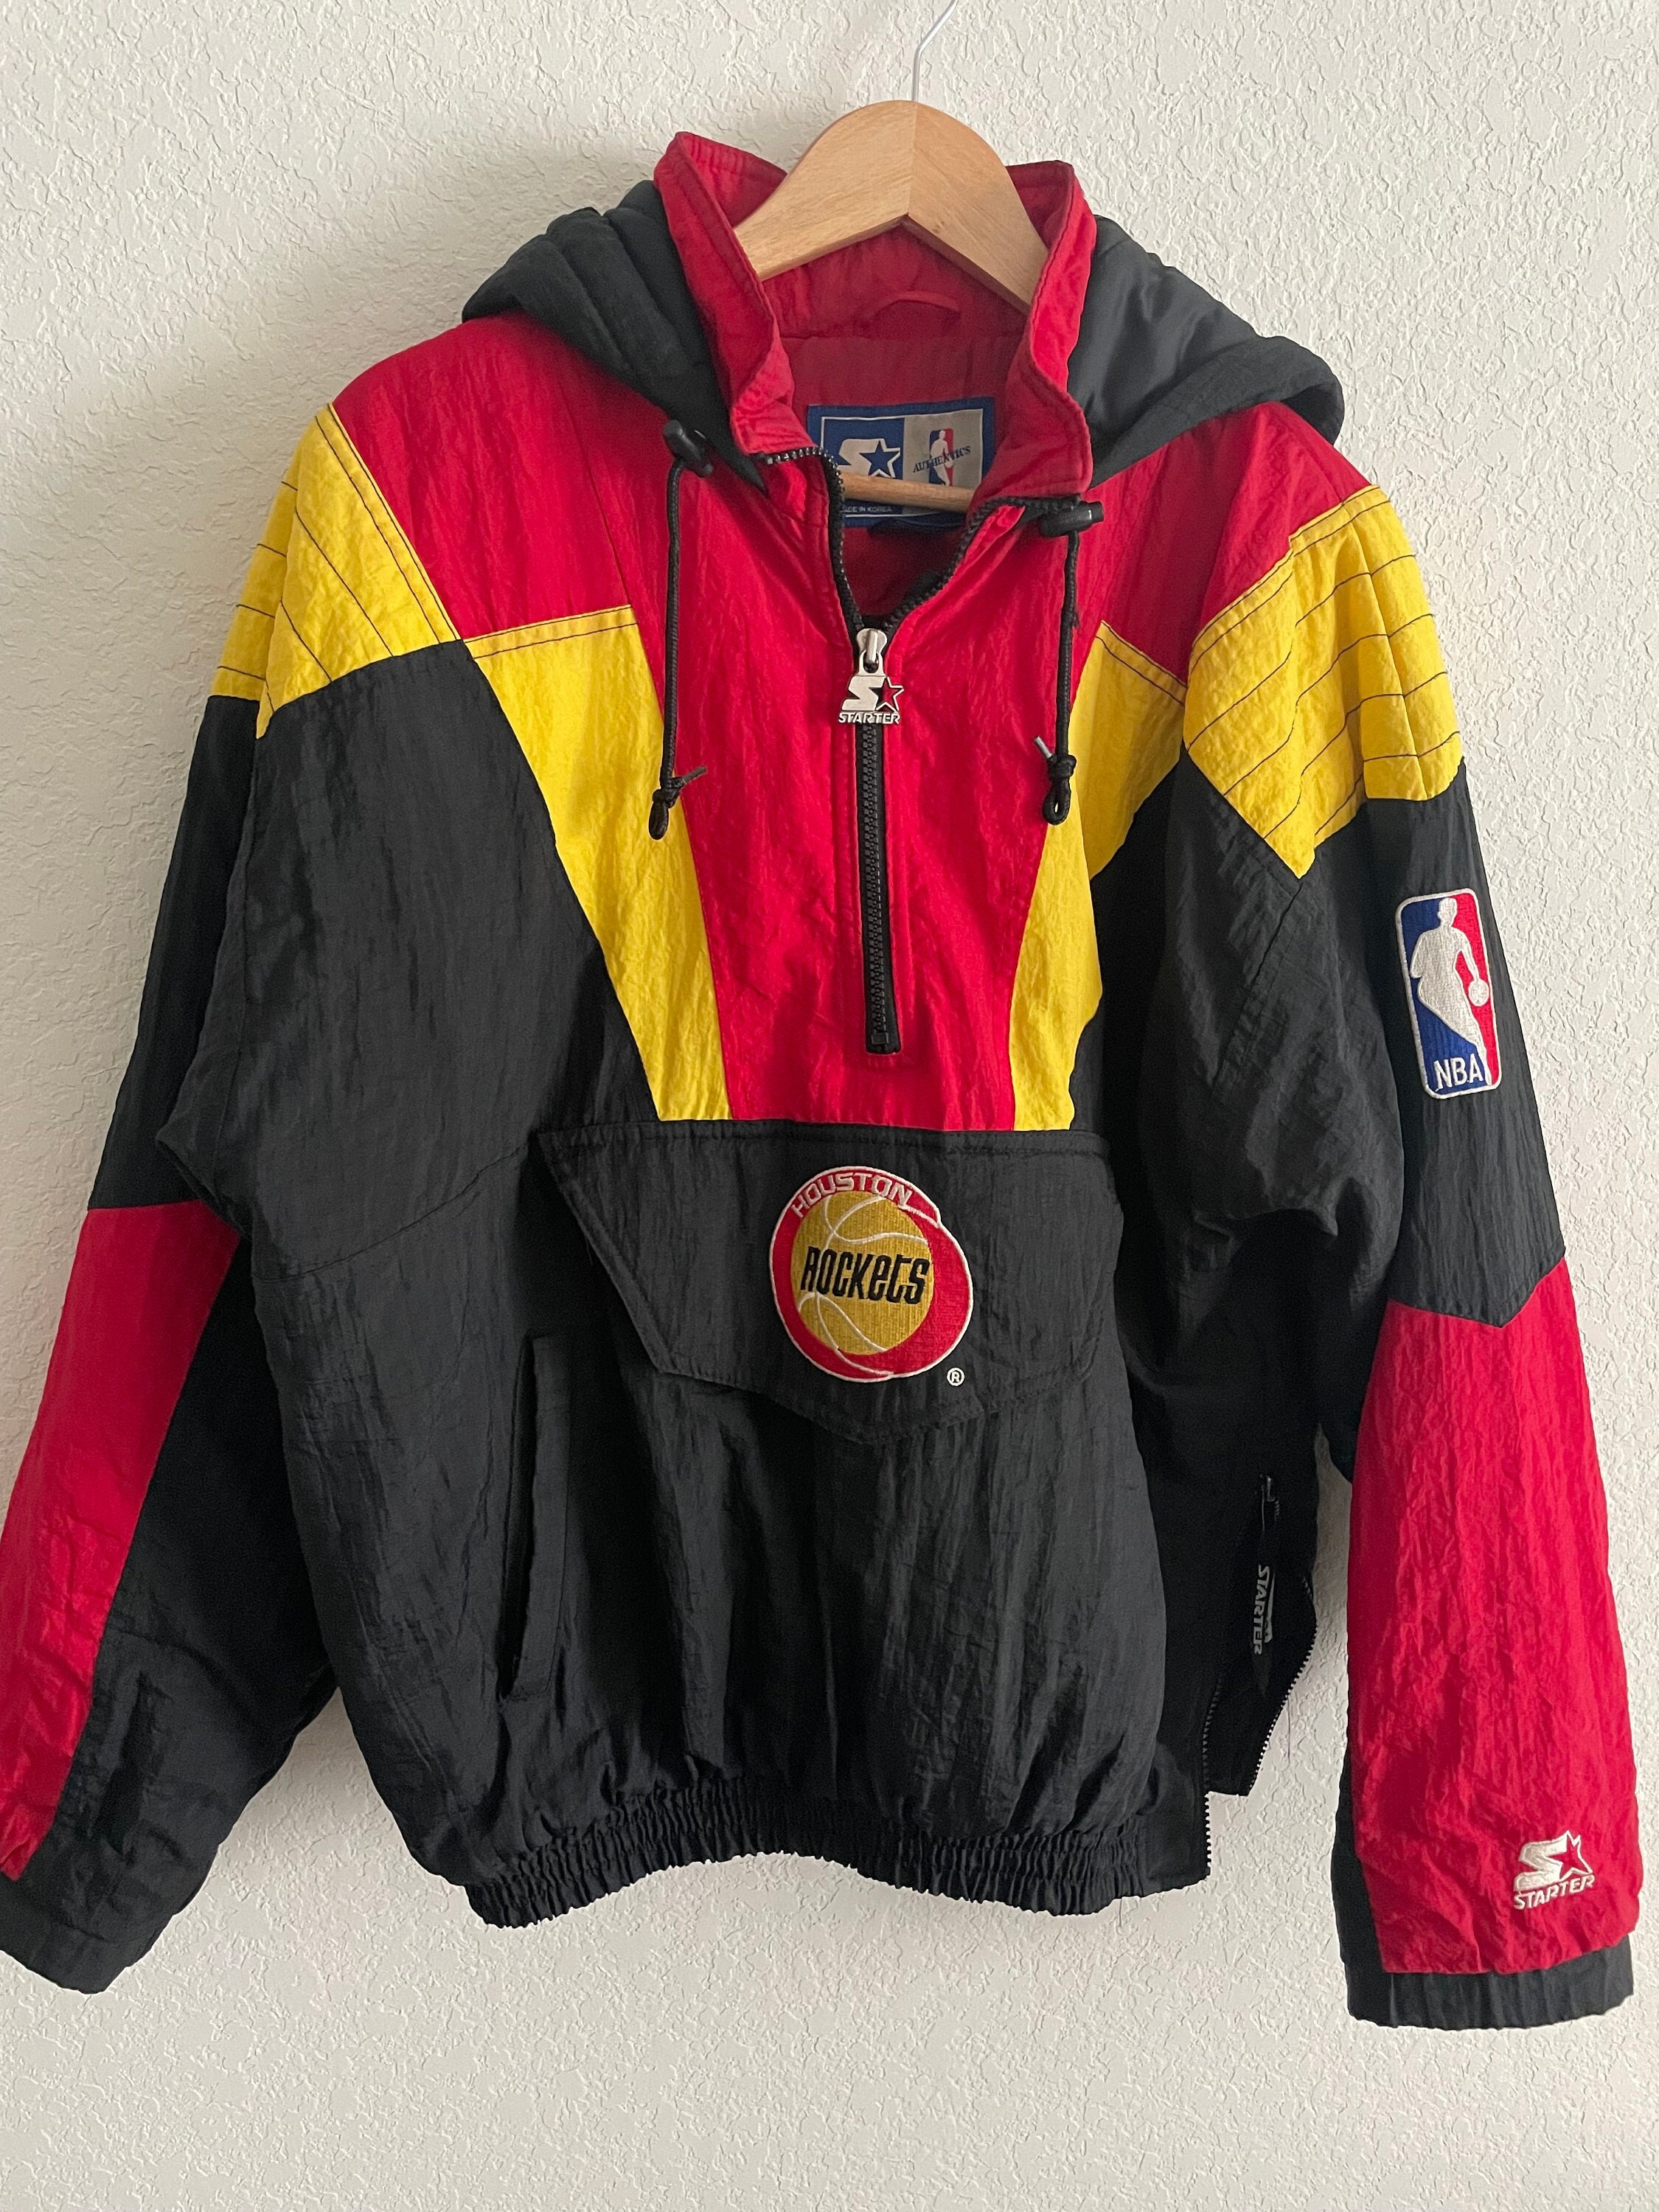 90s NBA/NFL Starter Jackets : r/nostalgia